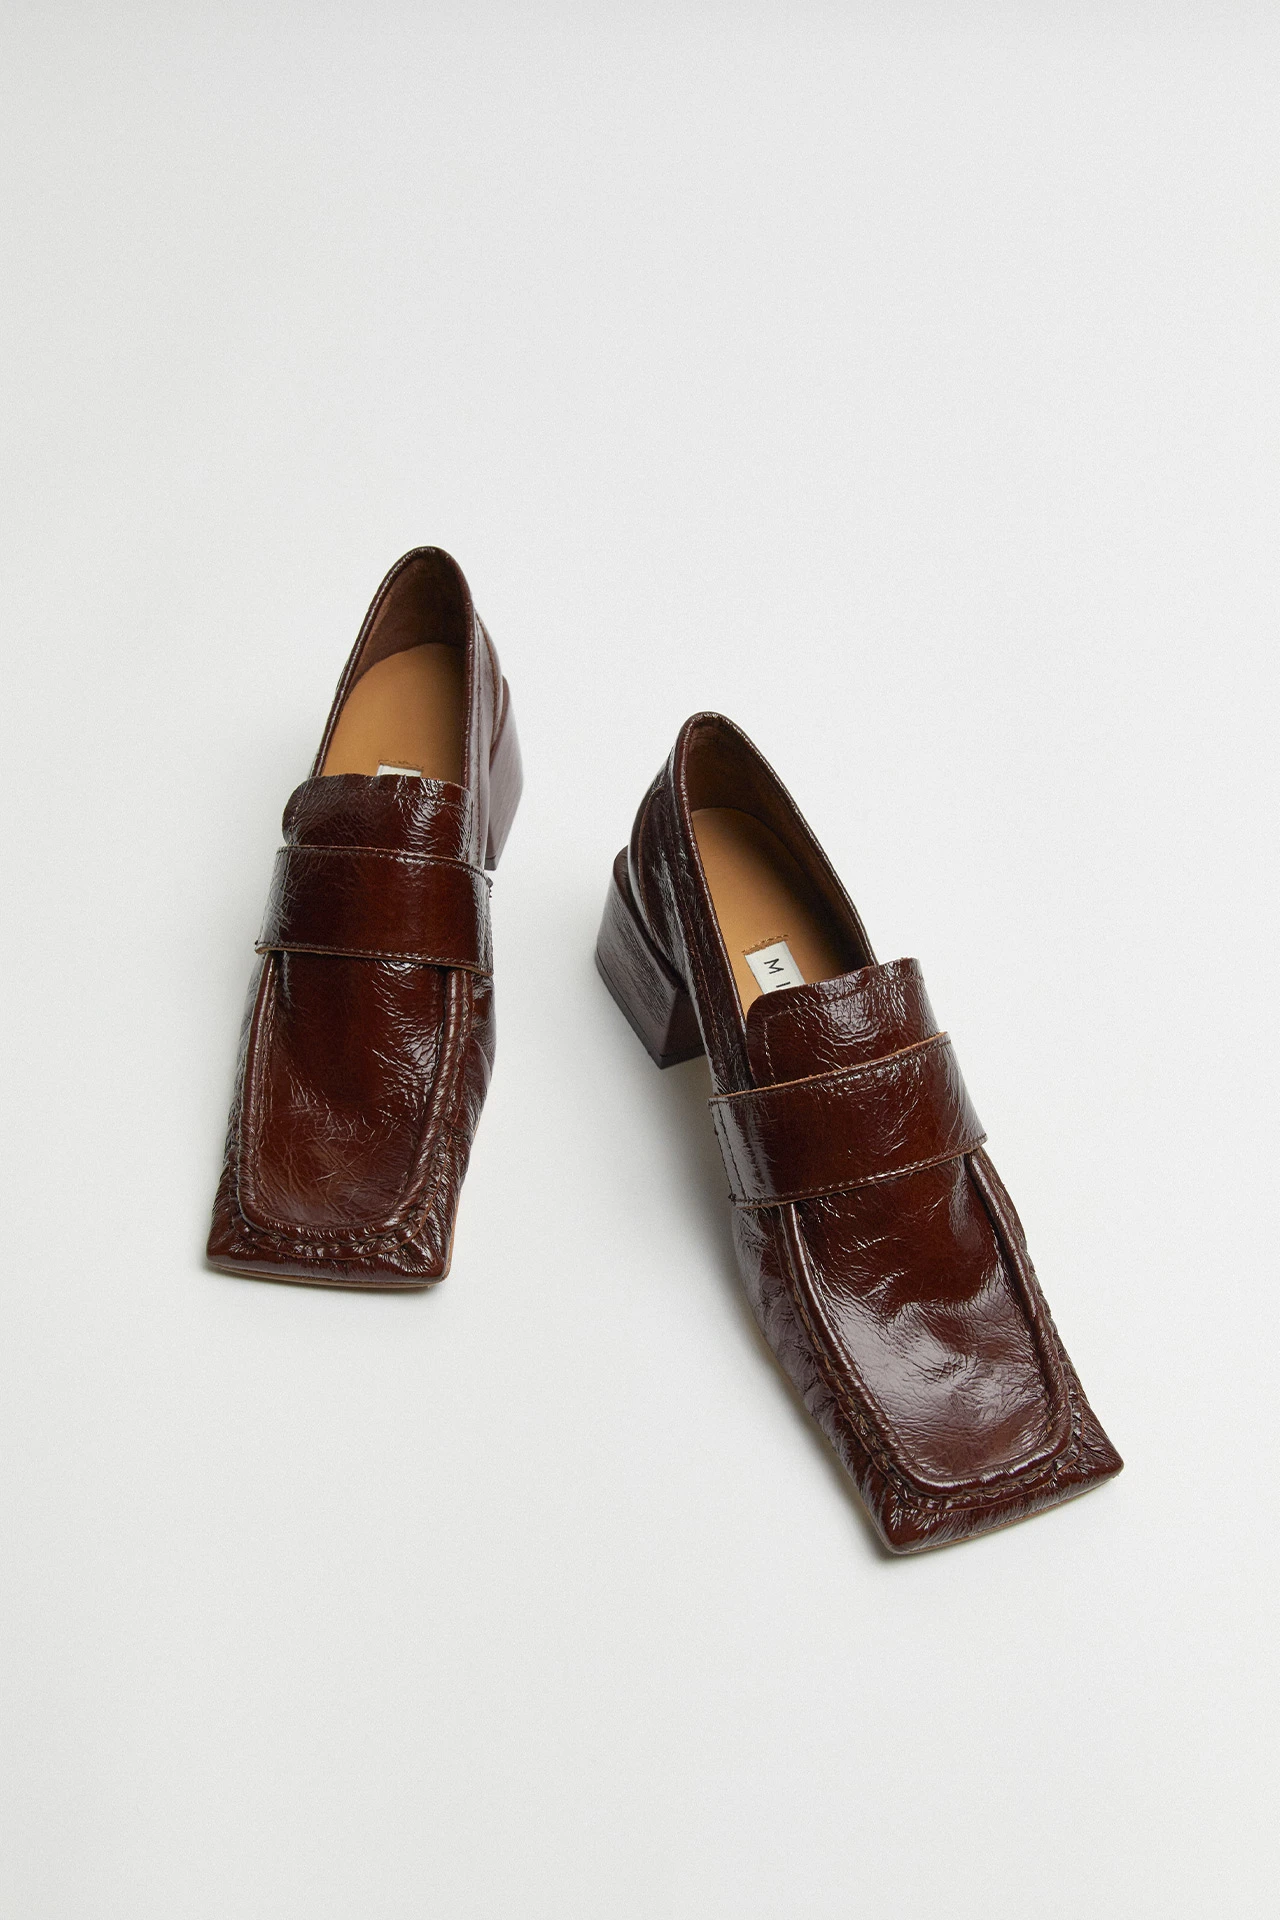 Miista-serena-brown-patent-loafers-04